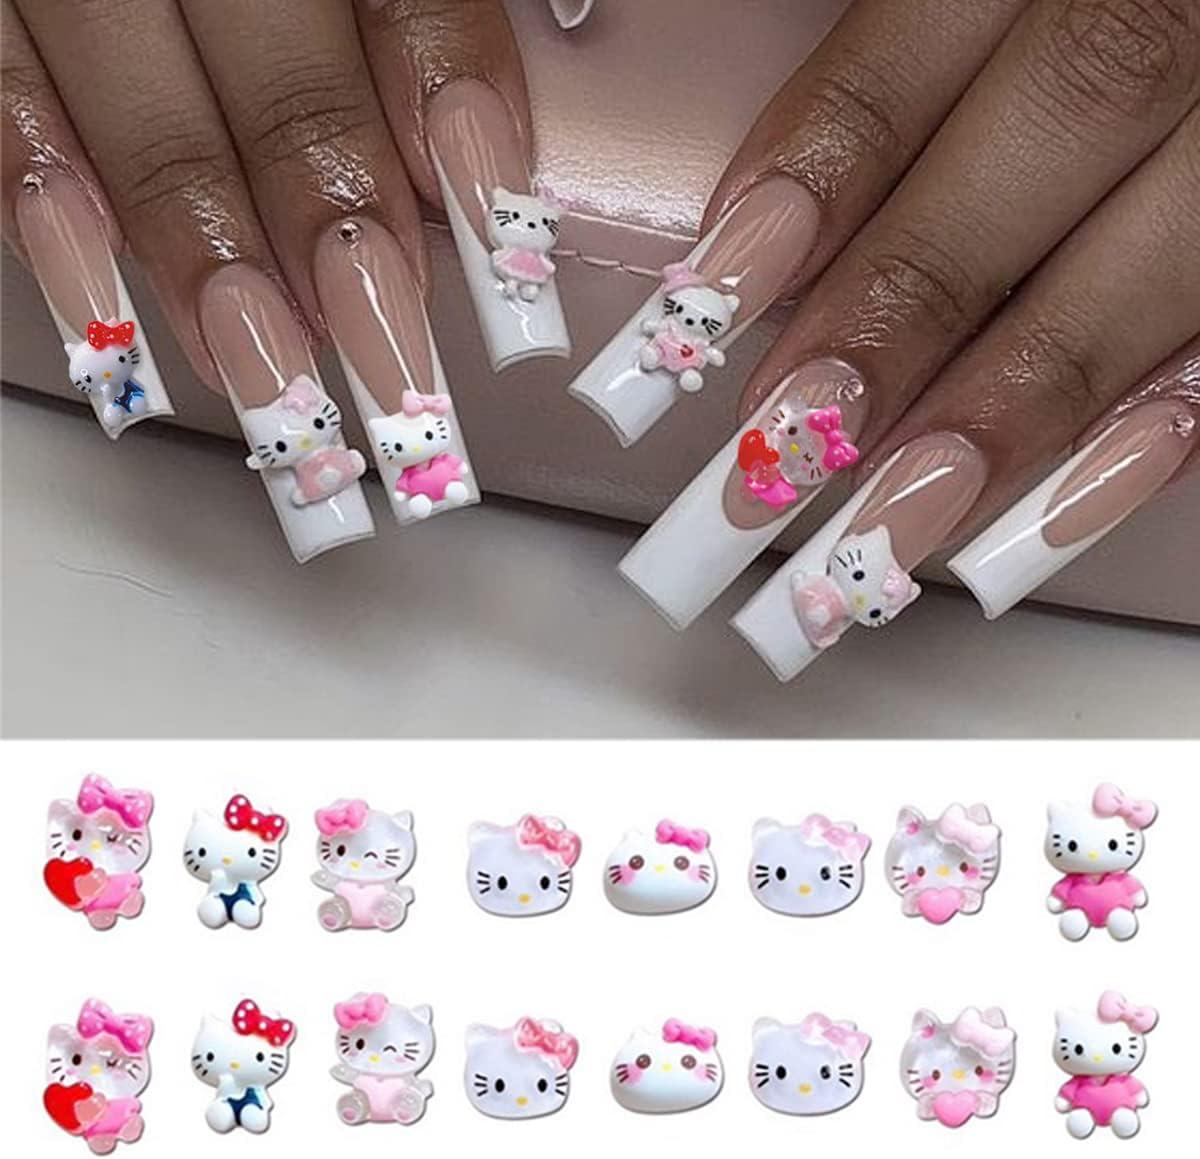 kandeej.com: Cute Hello Kitty Nails